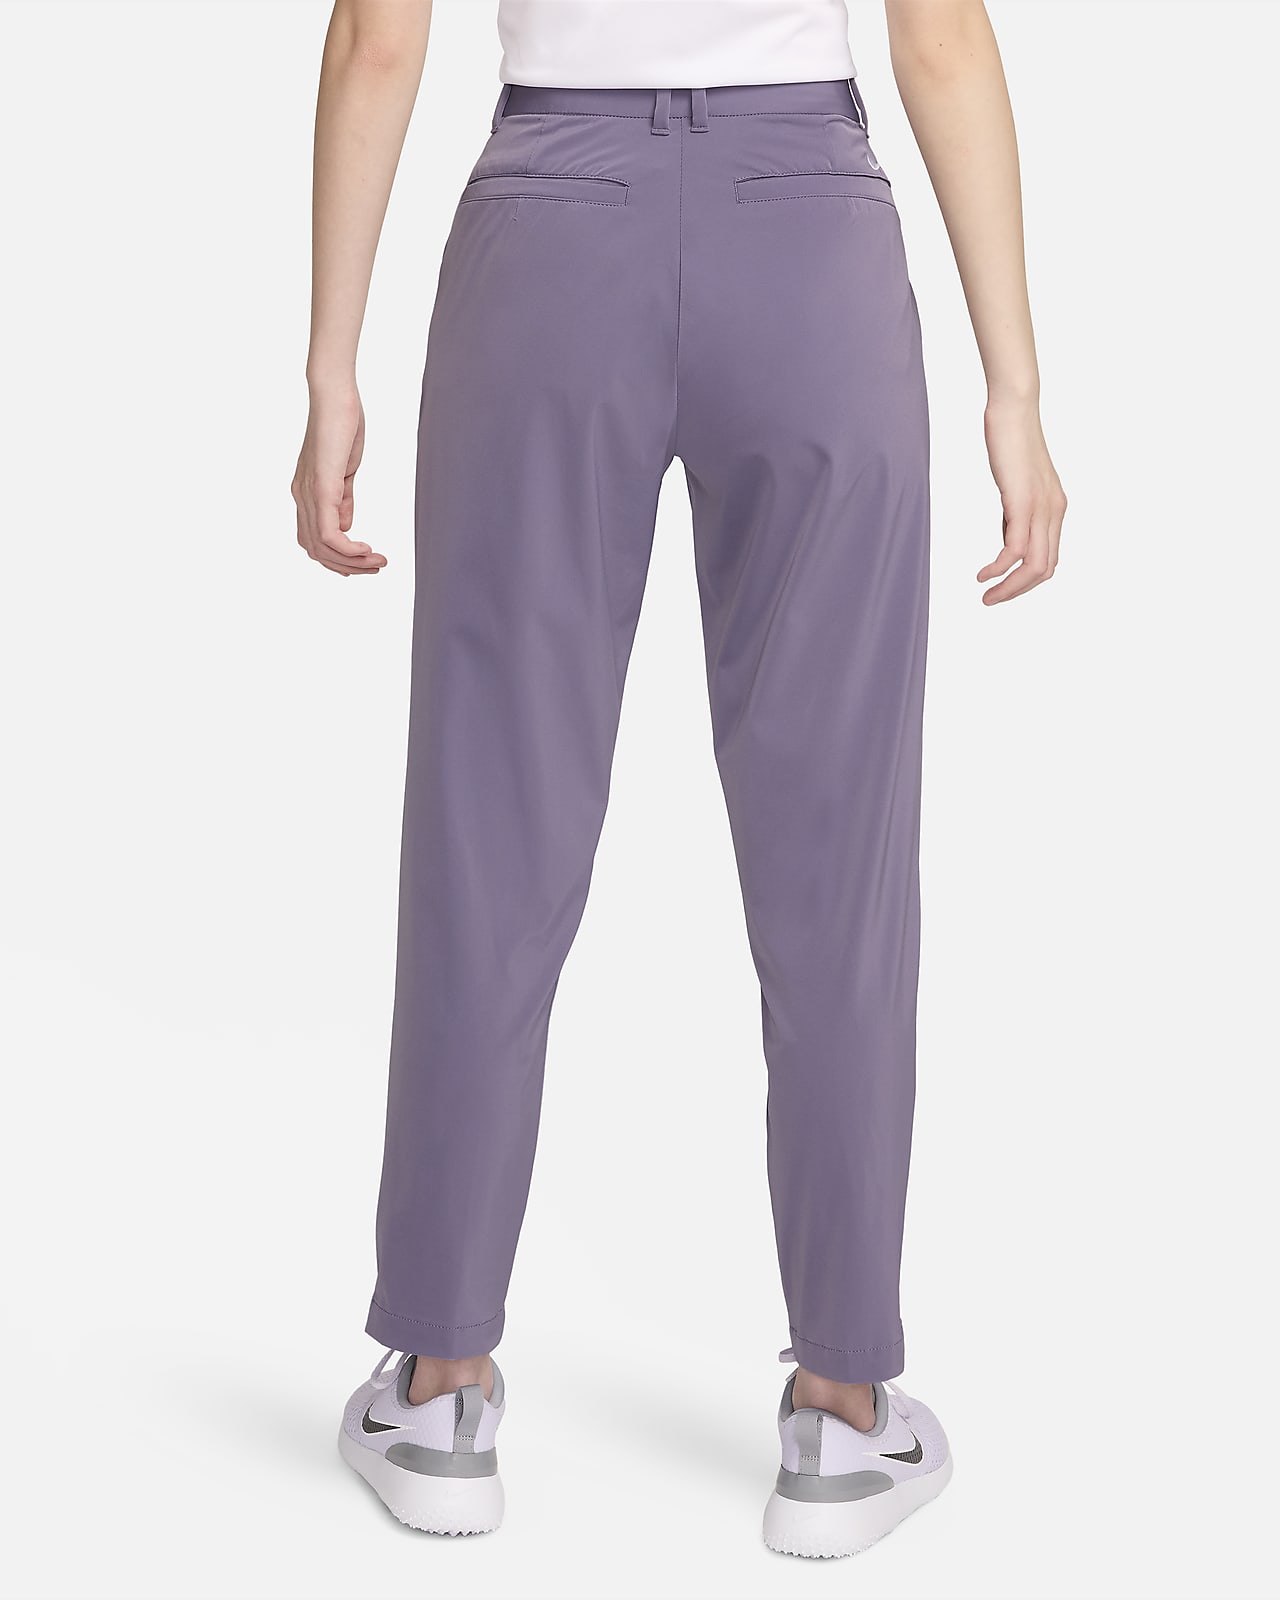 Nike Women's Dri-FIT Modern Rise Tech Crop Golf Pants (14, Light